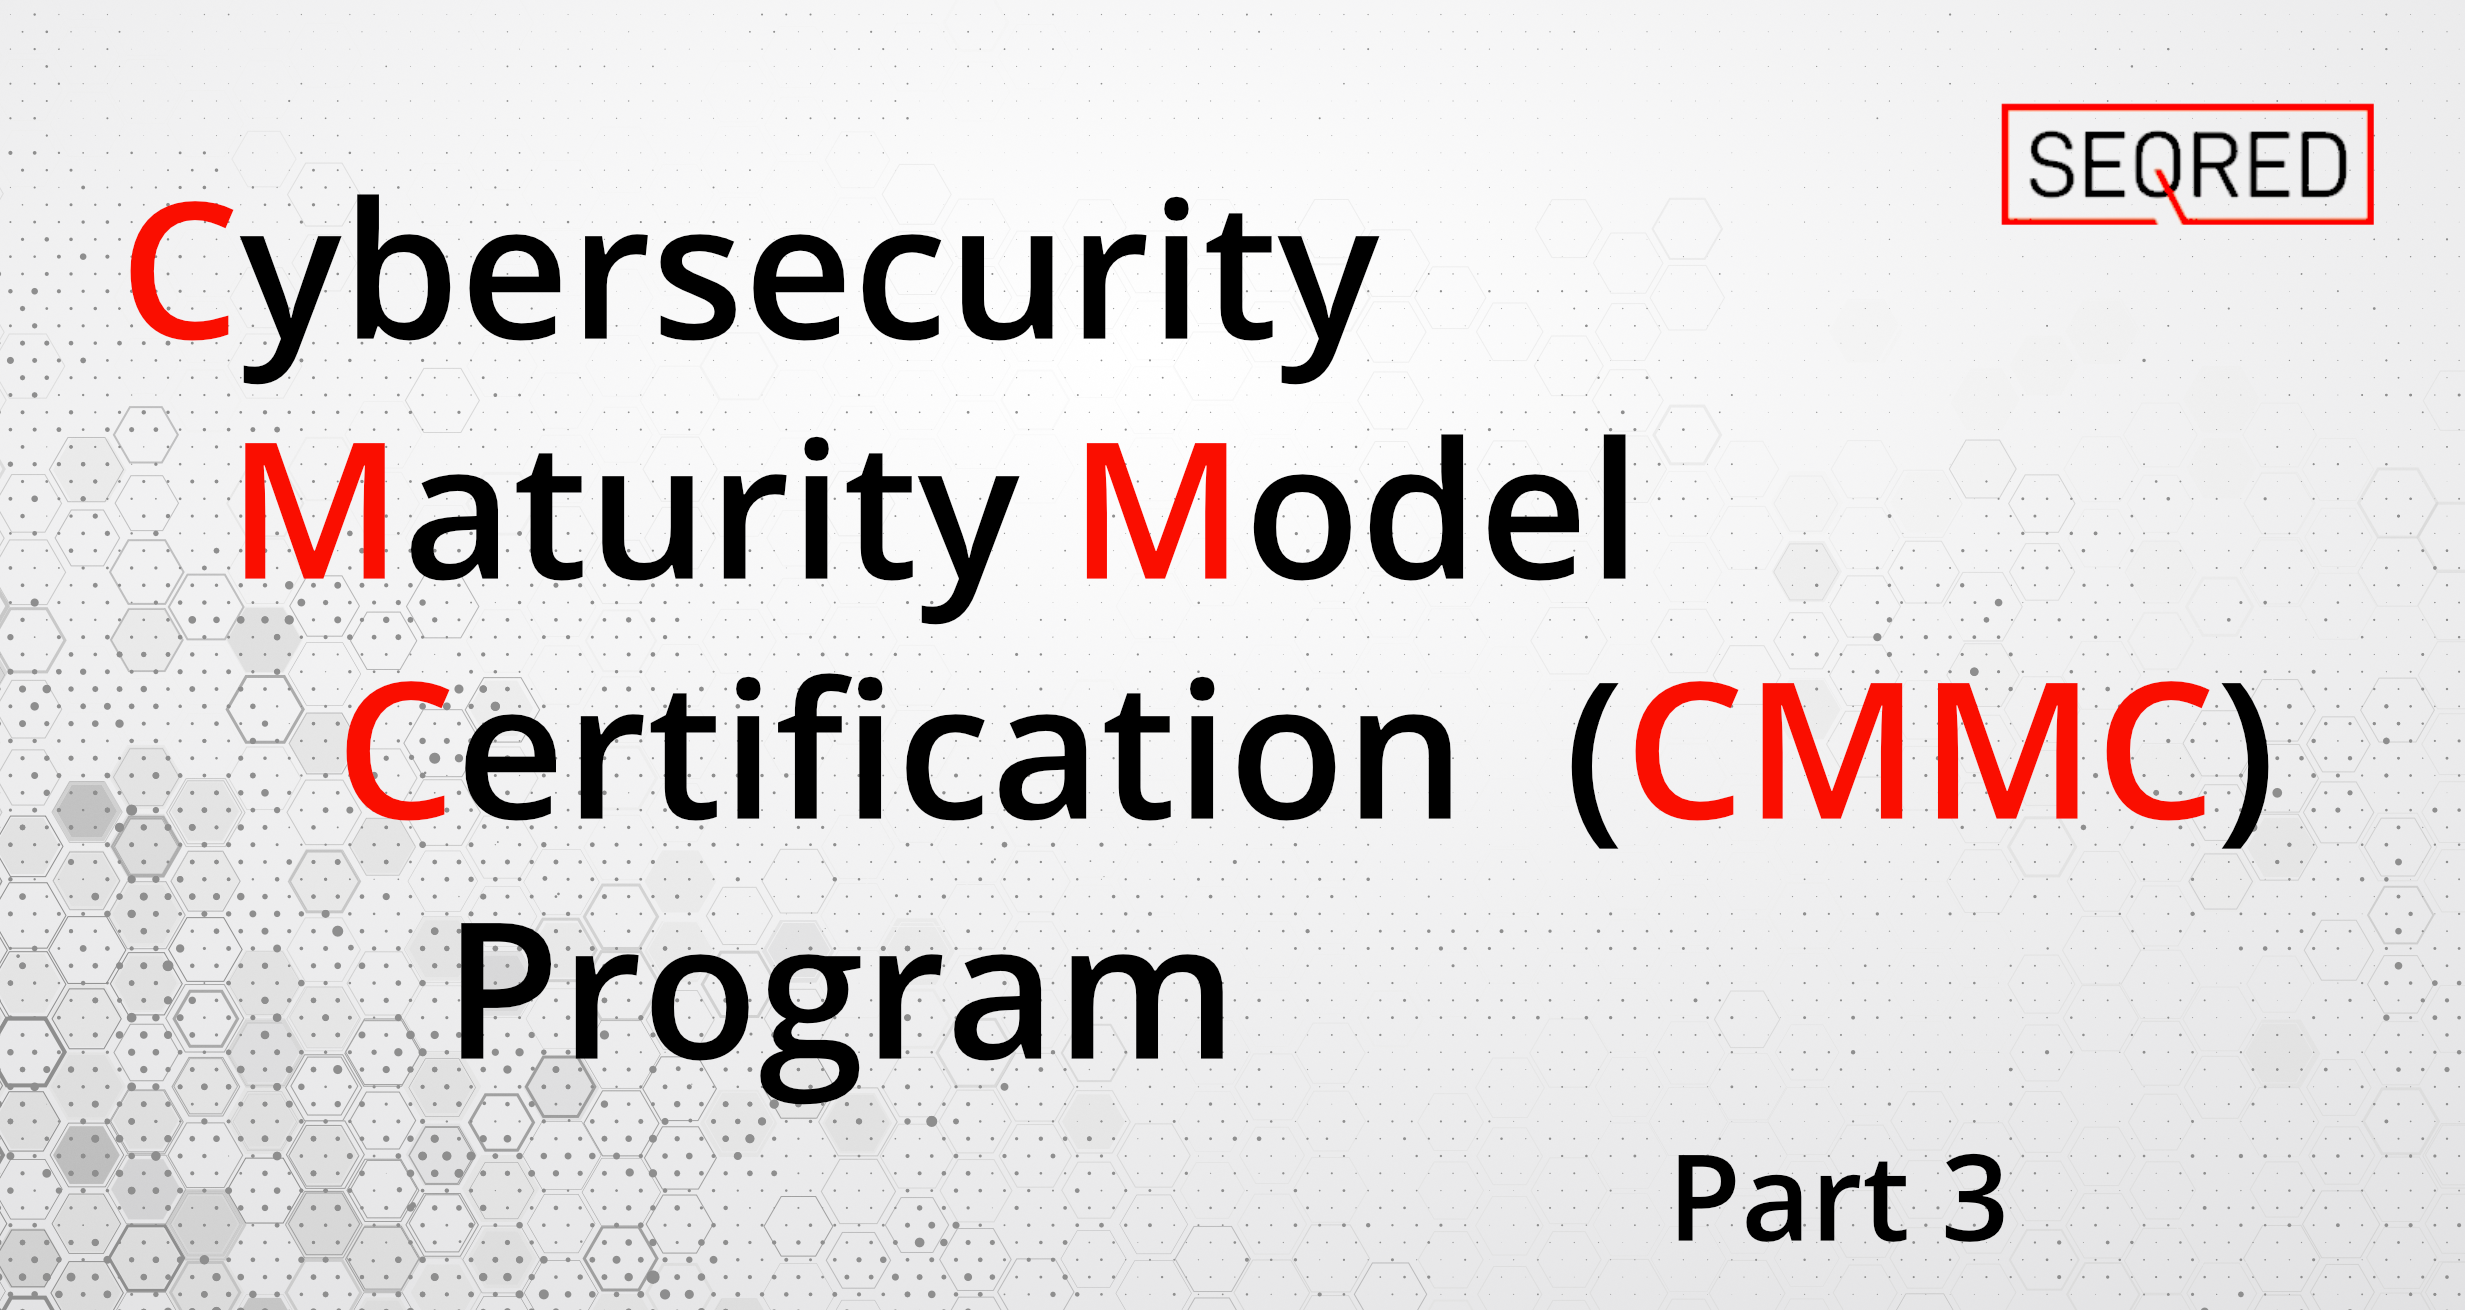 The Cybersecurity Maturity Model Certification (CMMC) 